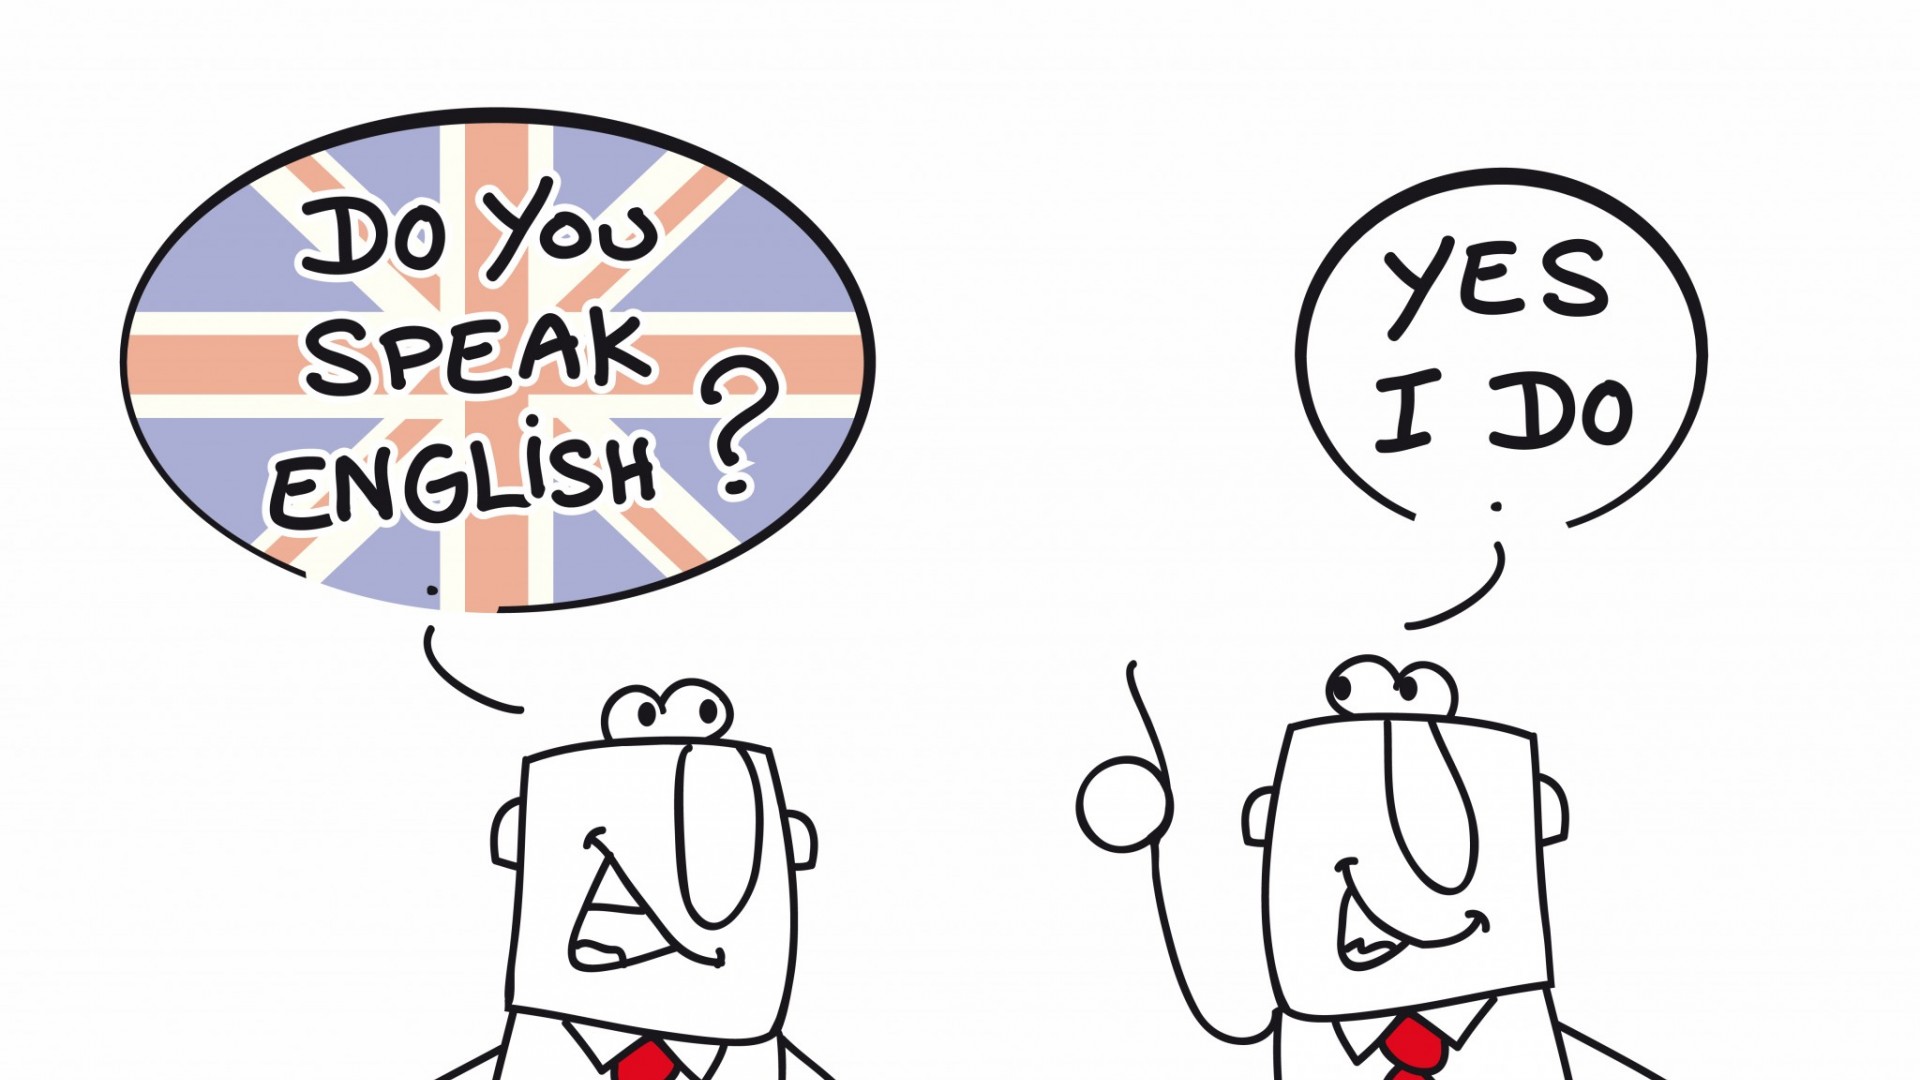 They can t speak english. Speak English. Разговор на английском. Говорим по-английски. Разговаривать на английском.